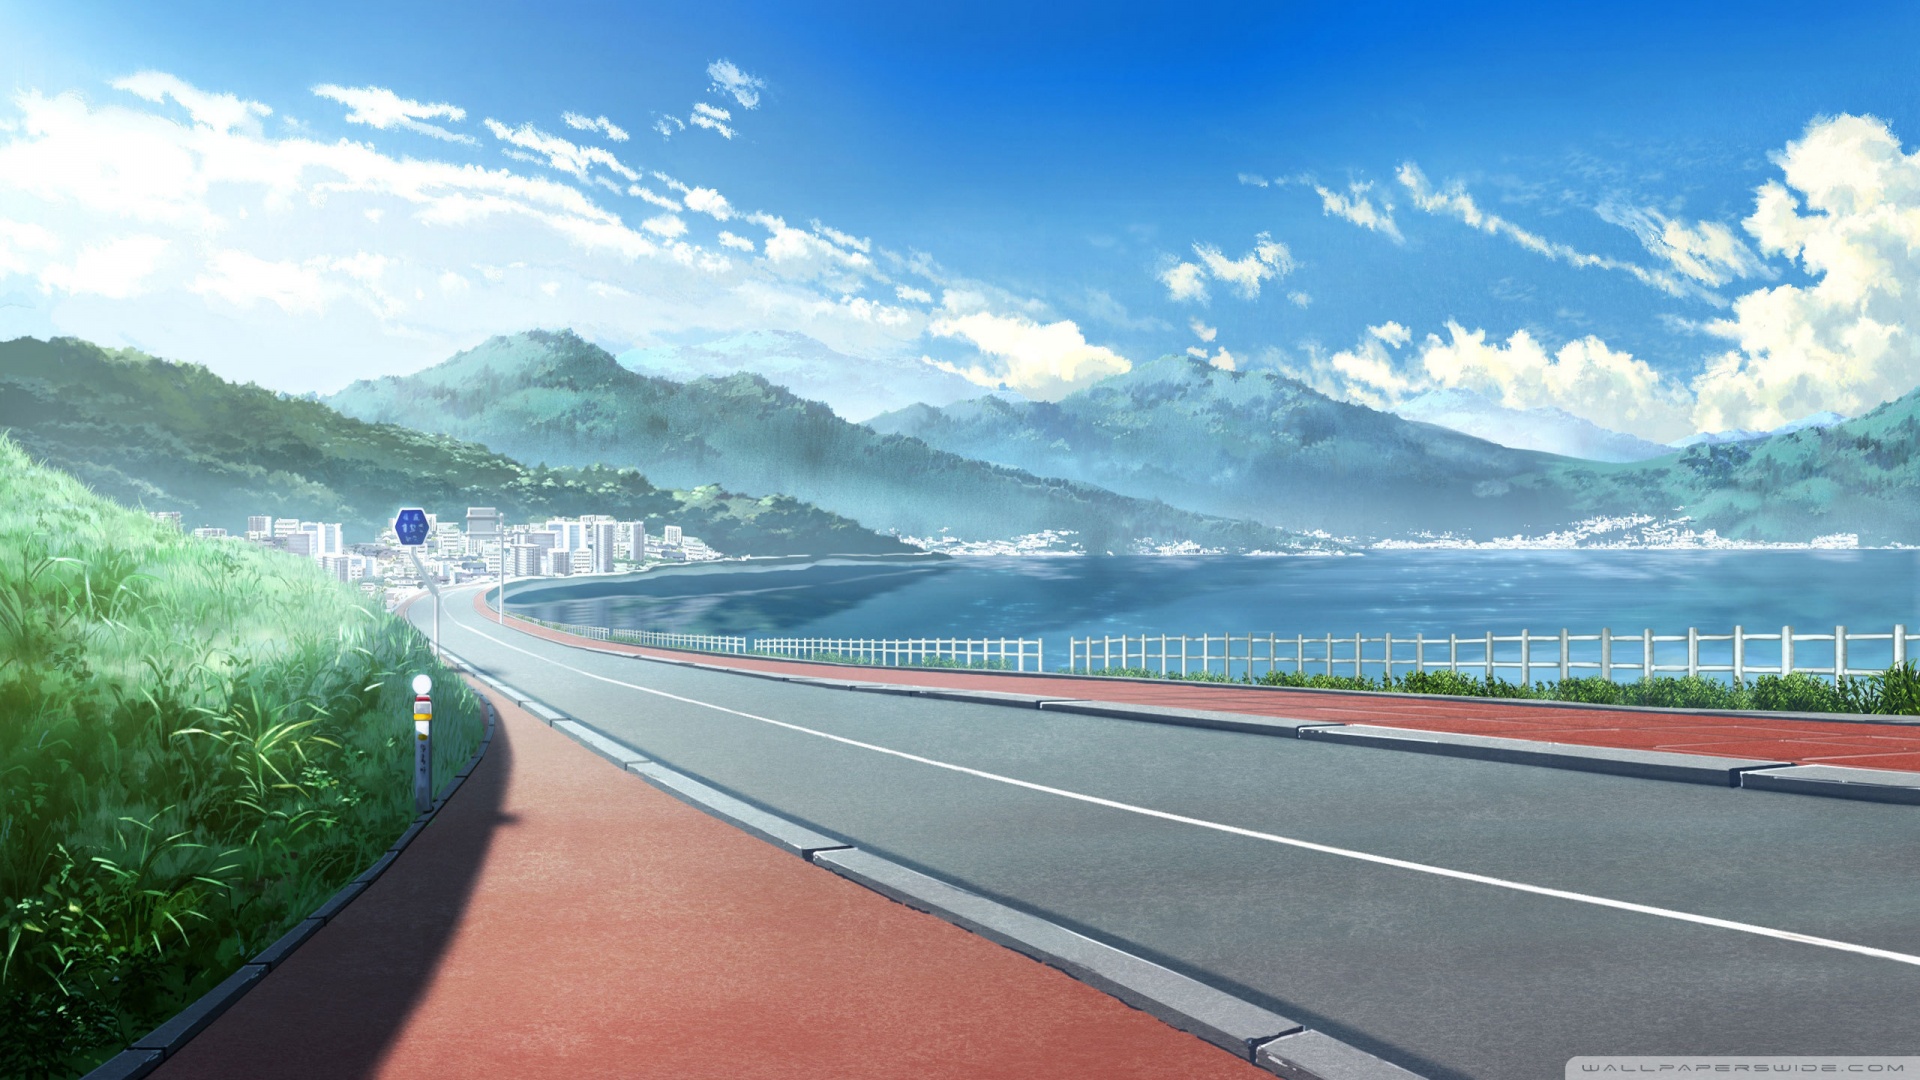 Anime Landscape Ultra Hd Desktop Background Wallpaper For 4k Uhd